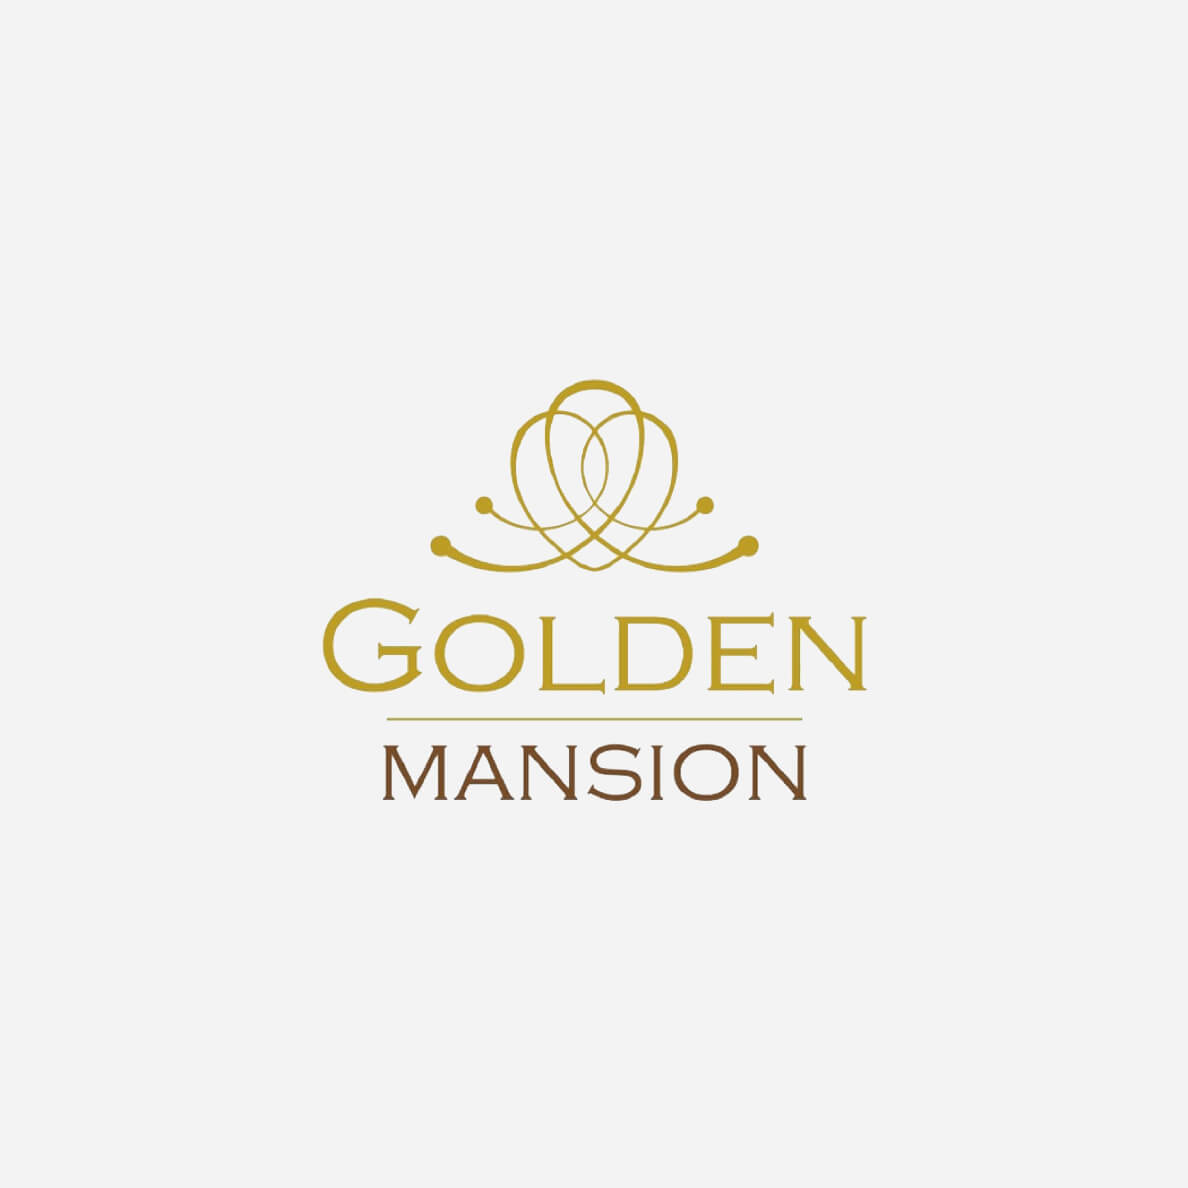 GOLDEN MANSION